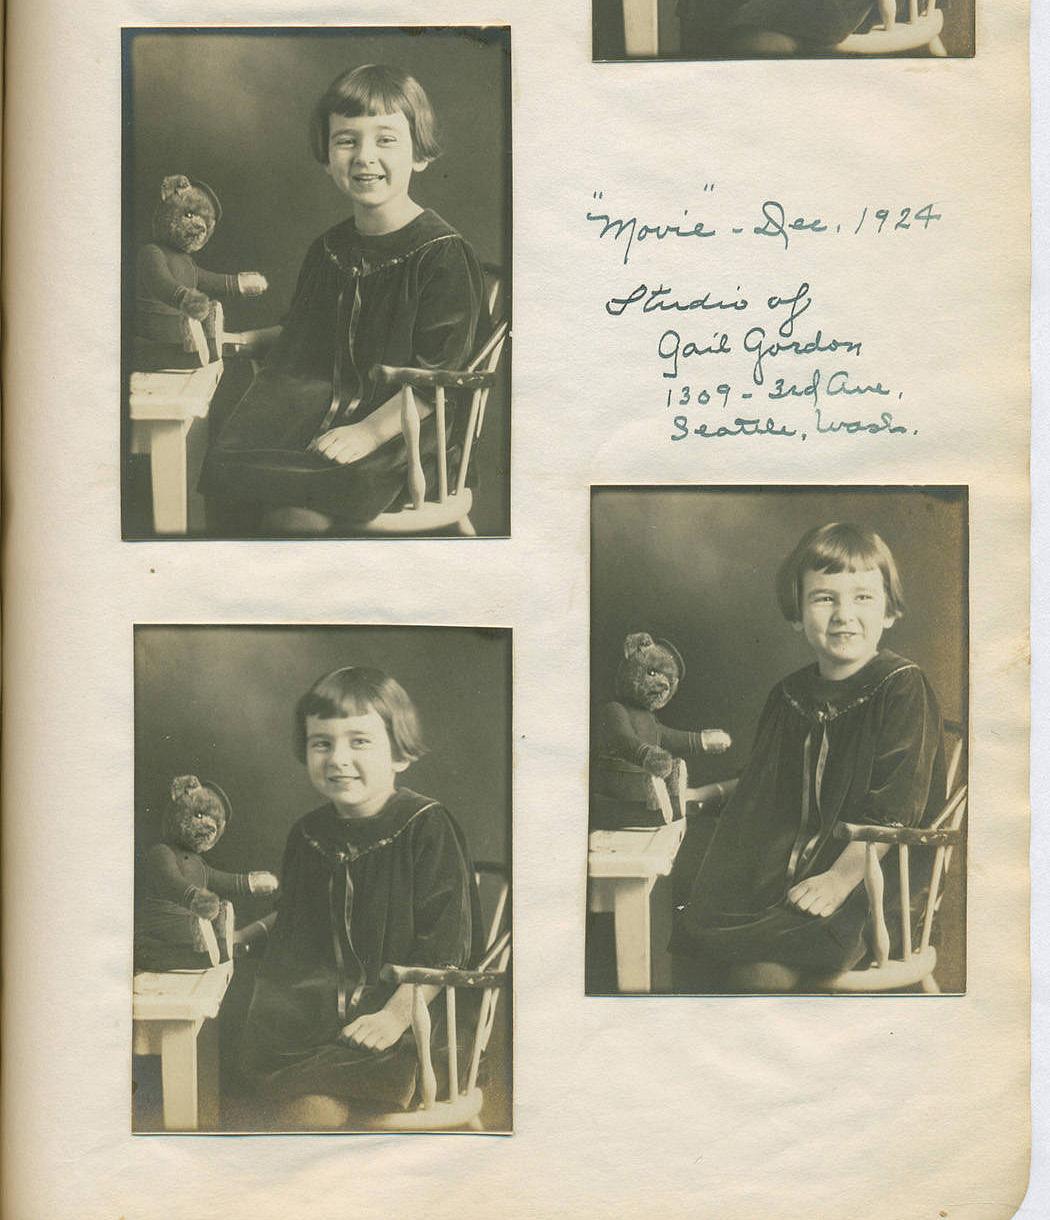 Scrapbook page titled "Movie" - Dec. 1924, Studio of Gail Gordan 1309 3rd Ave, Seattle, Washington